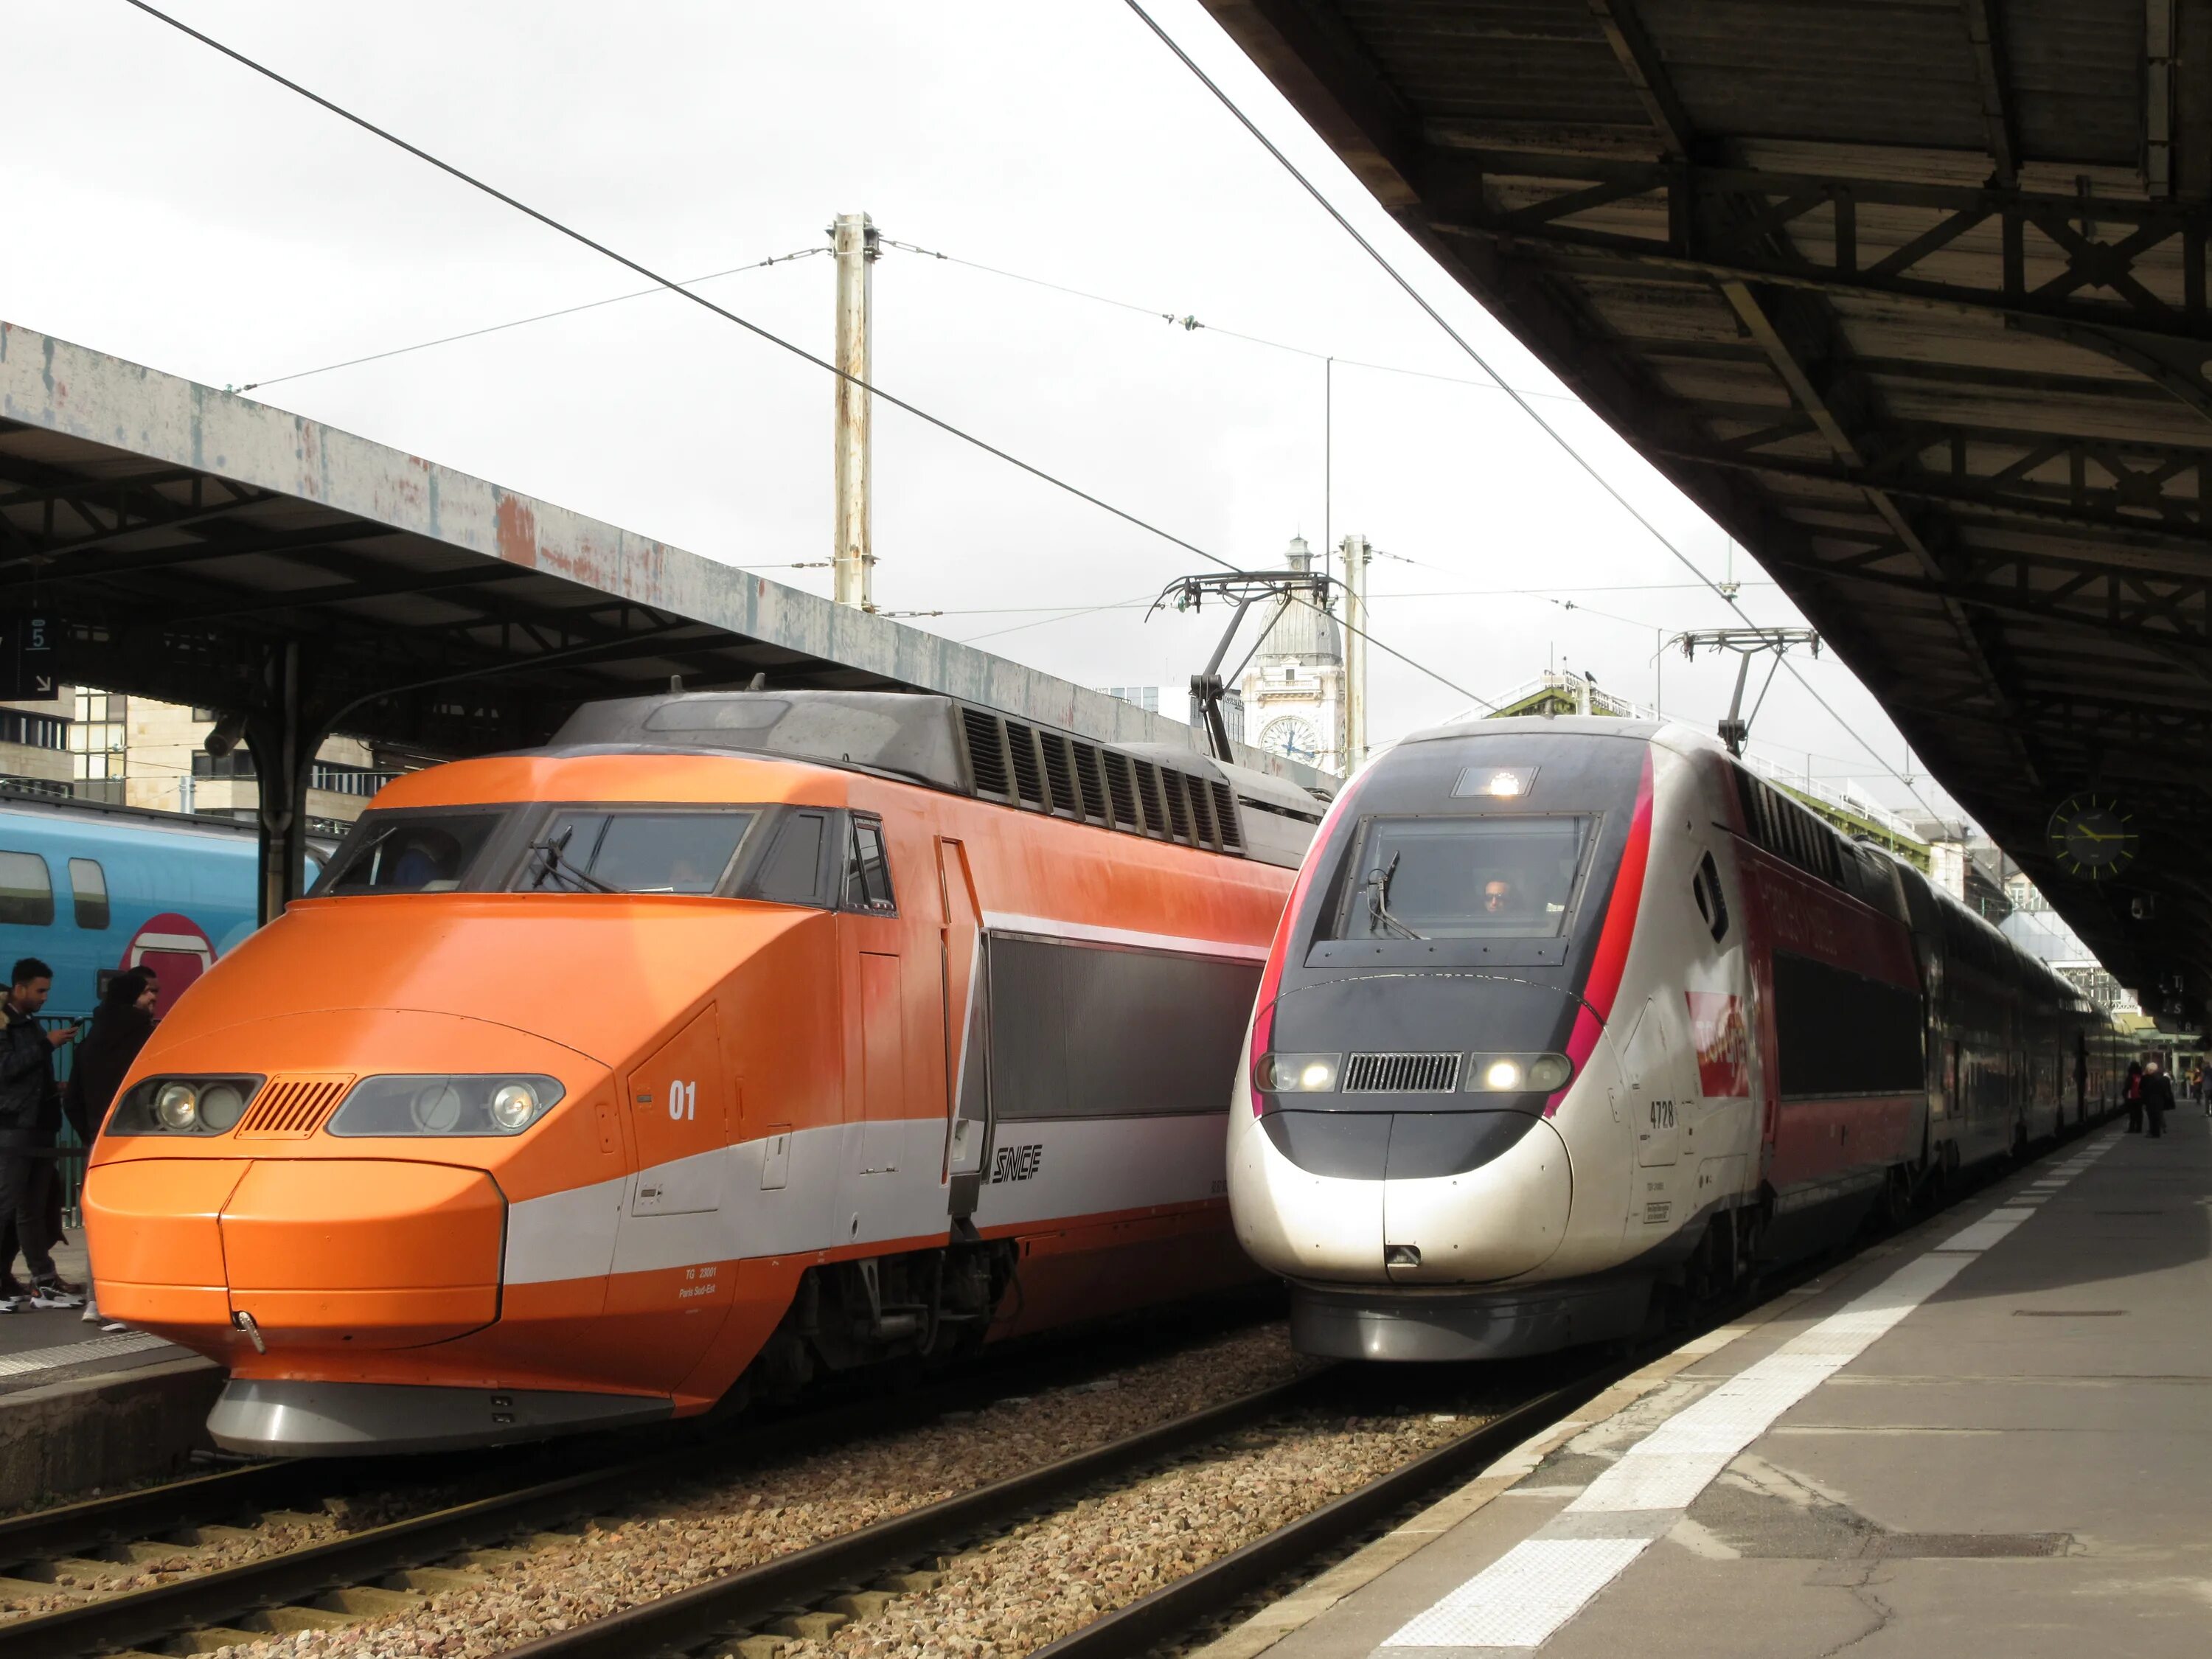 French train. Французские скоростные поезда TGV. Французский поезд TGV. Поезд TGV Франция. Поезд ТЖВ Франция скоростной.